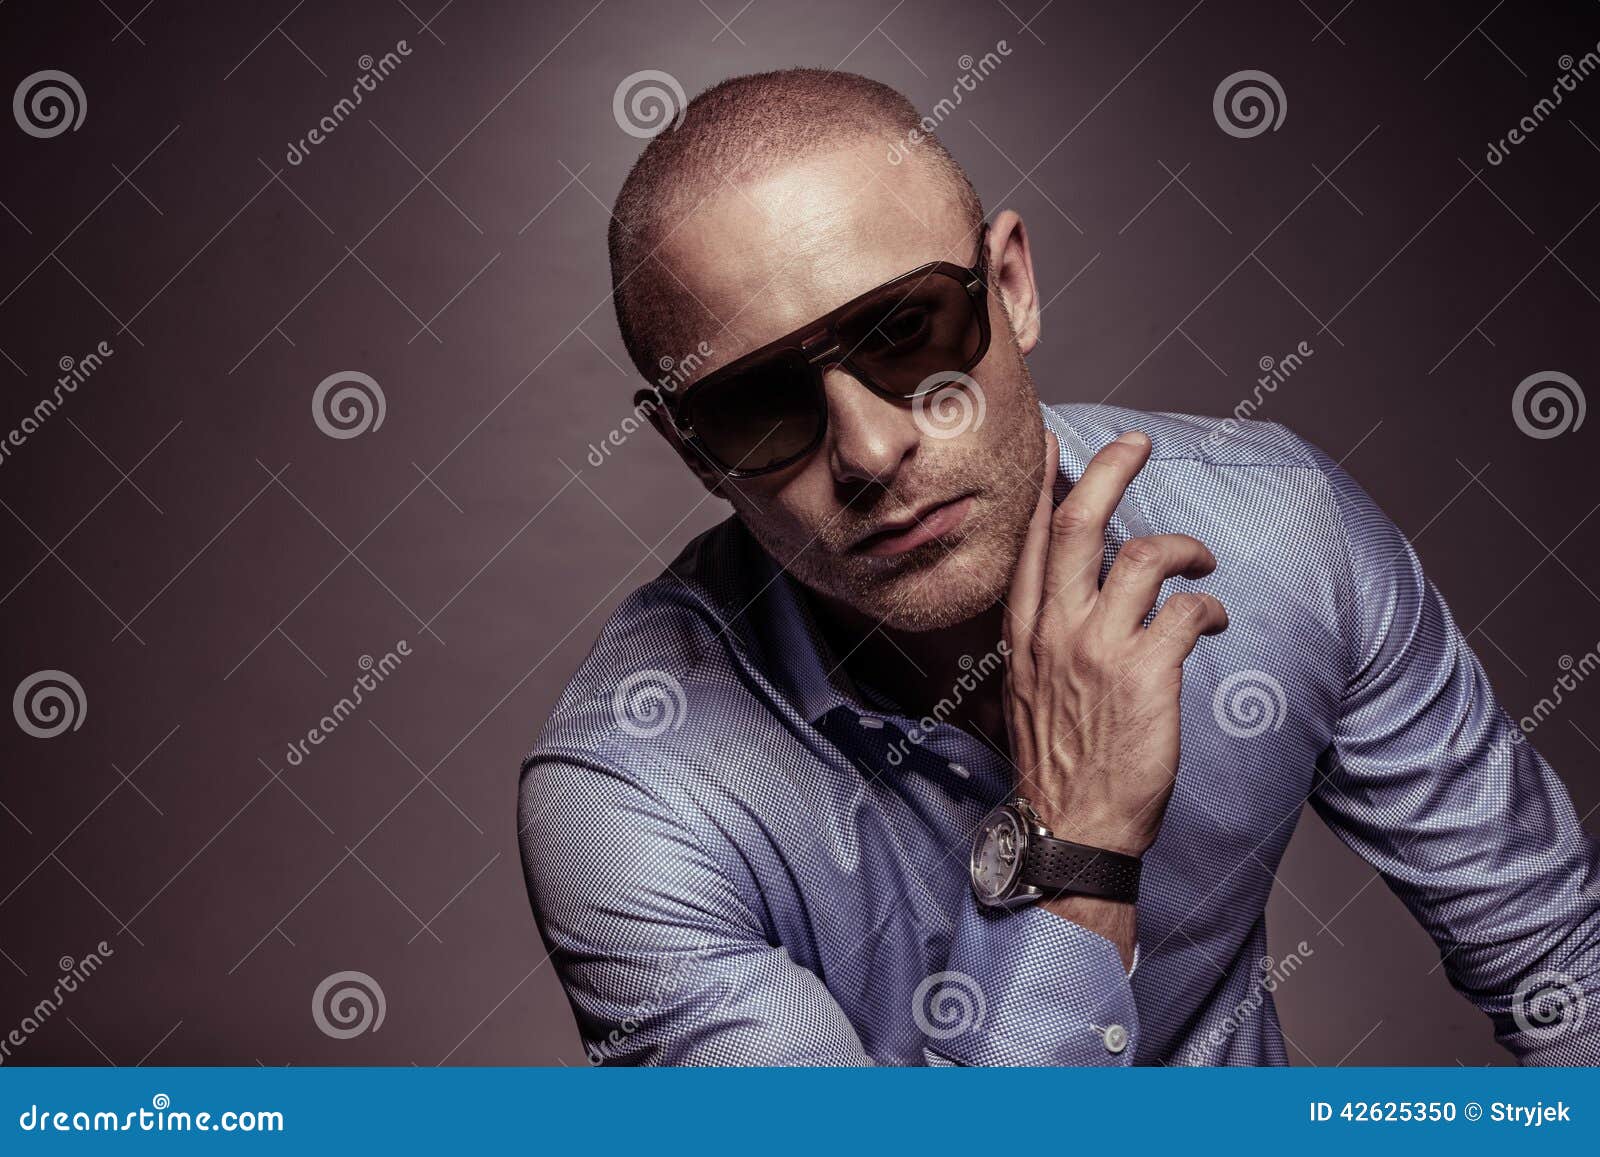 suave handsome man in sunglasses